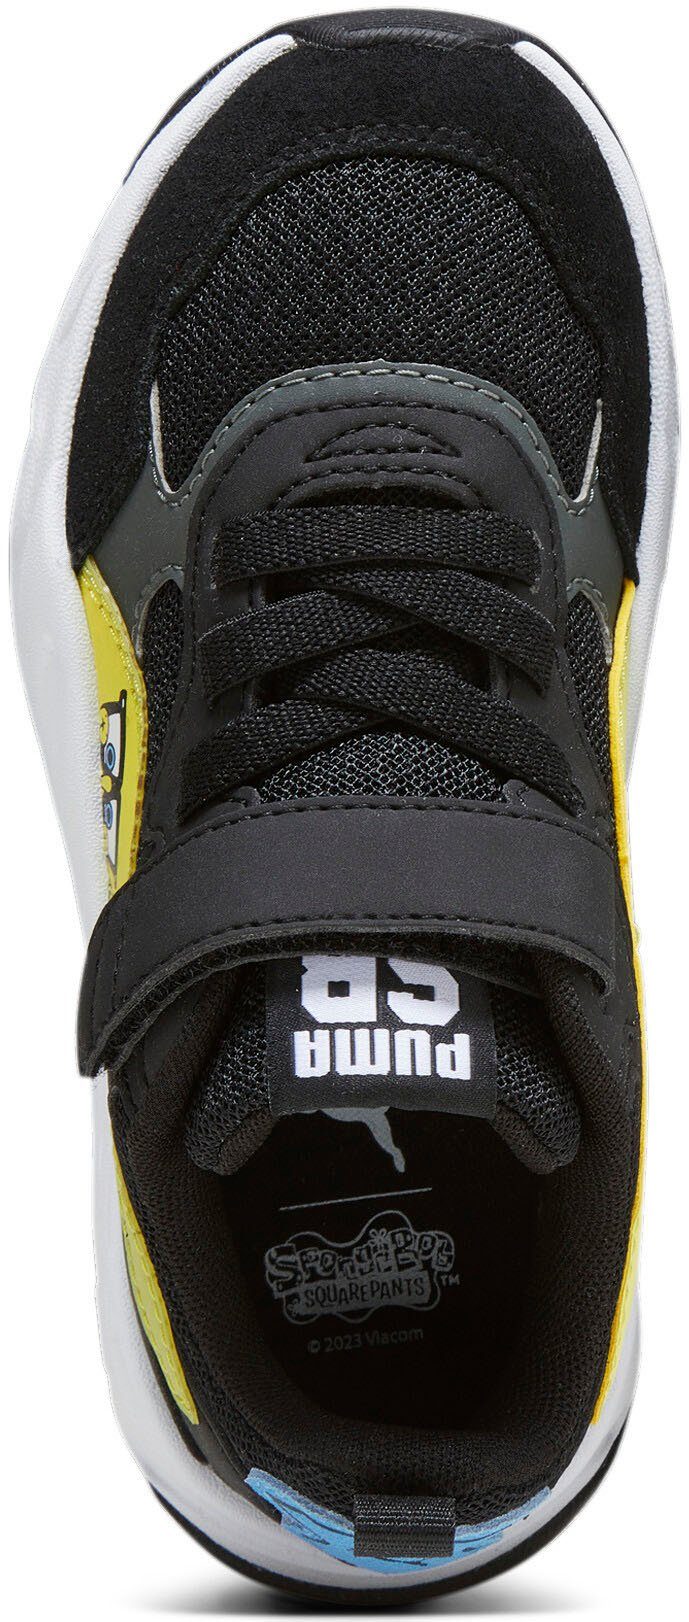 PUMA TRINITY SPONGEBOB Sneaker AC+ PS